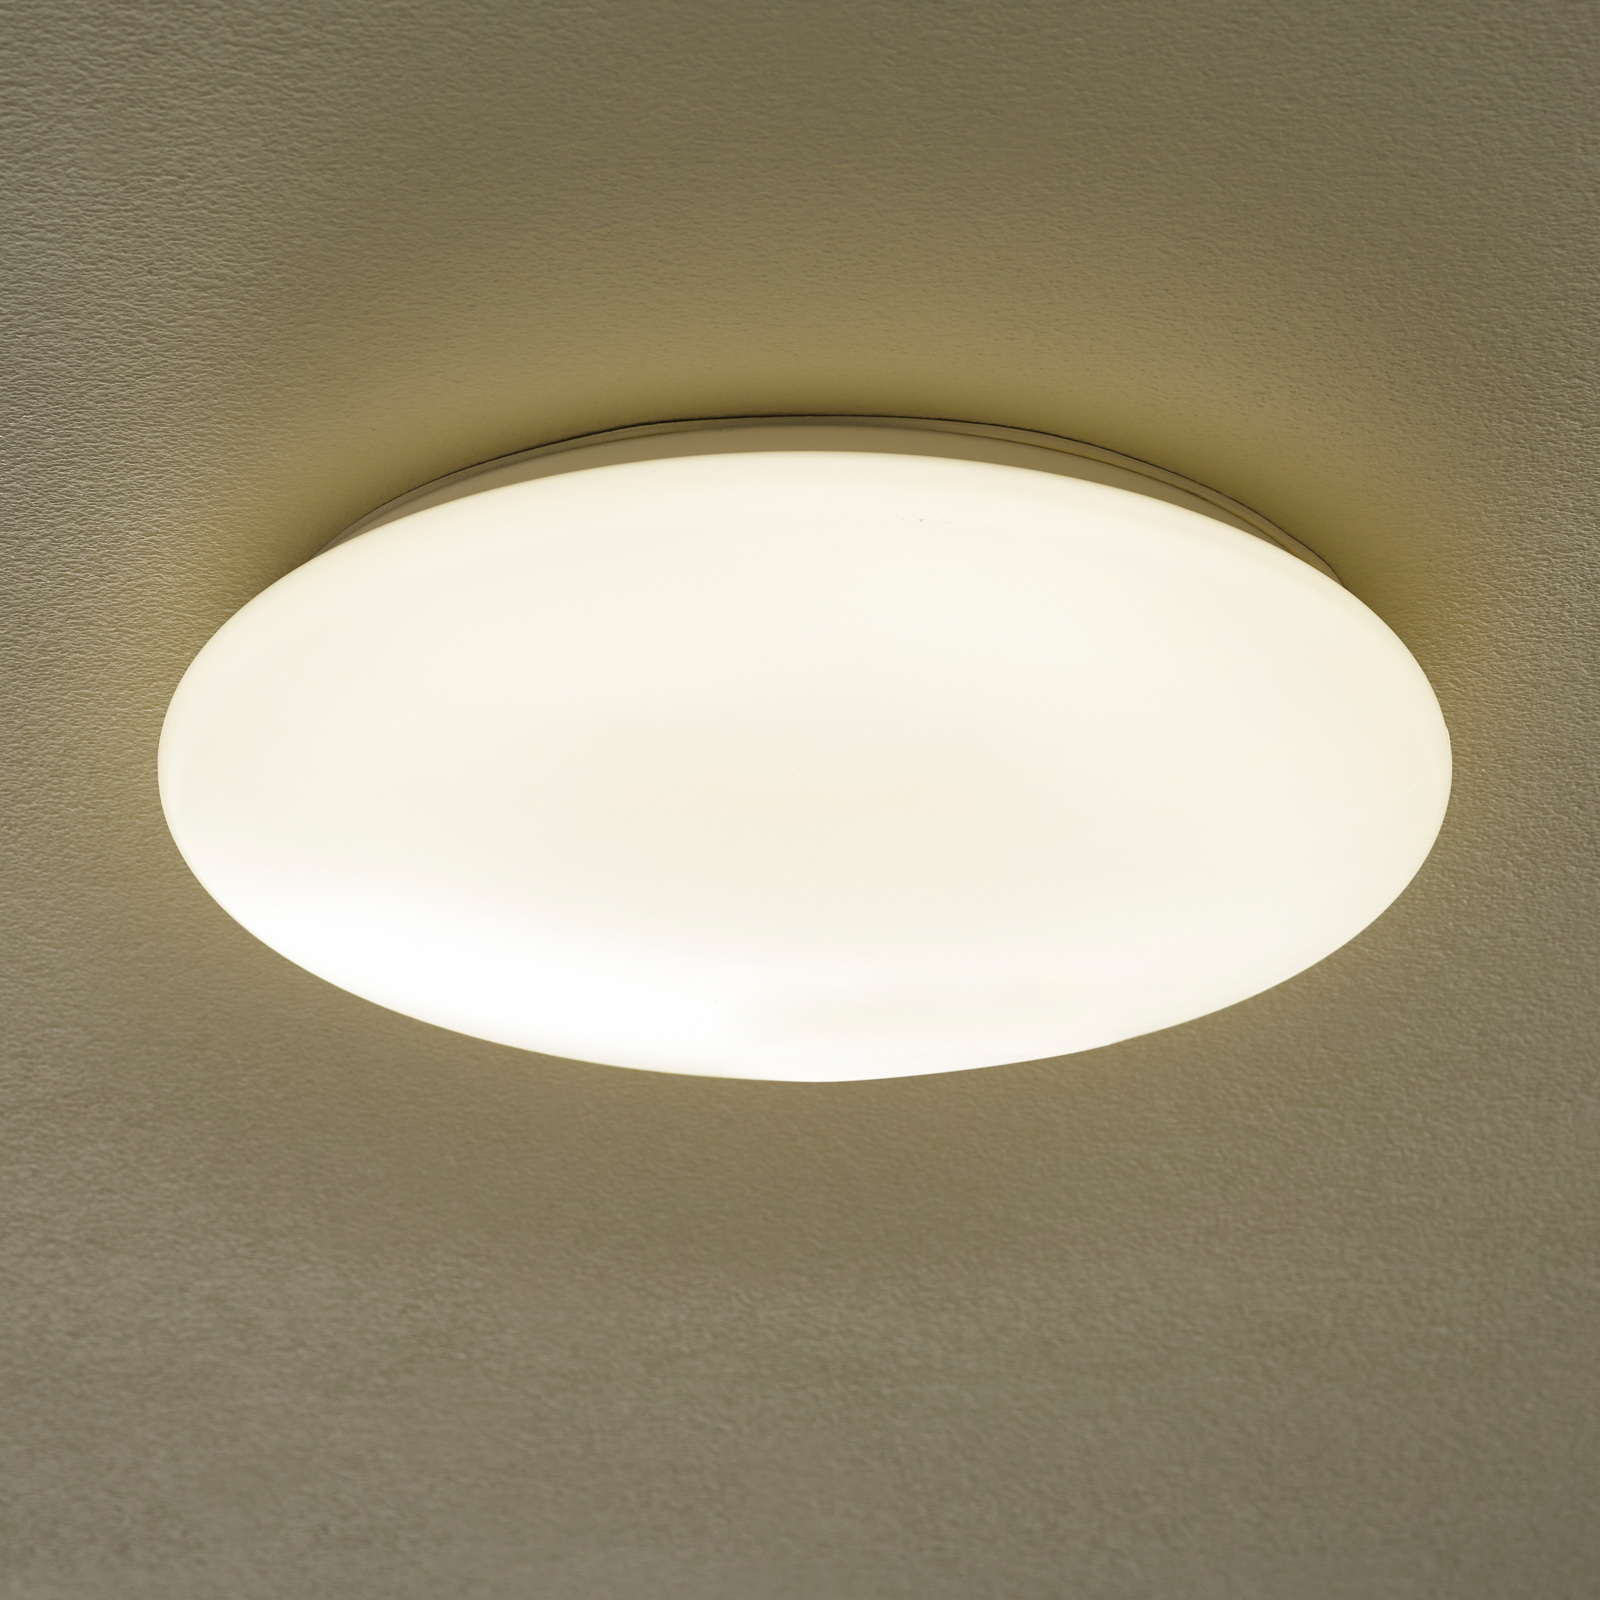 Lampa sufitowa LED Altona, HF, 4 000 K 36 cm